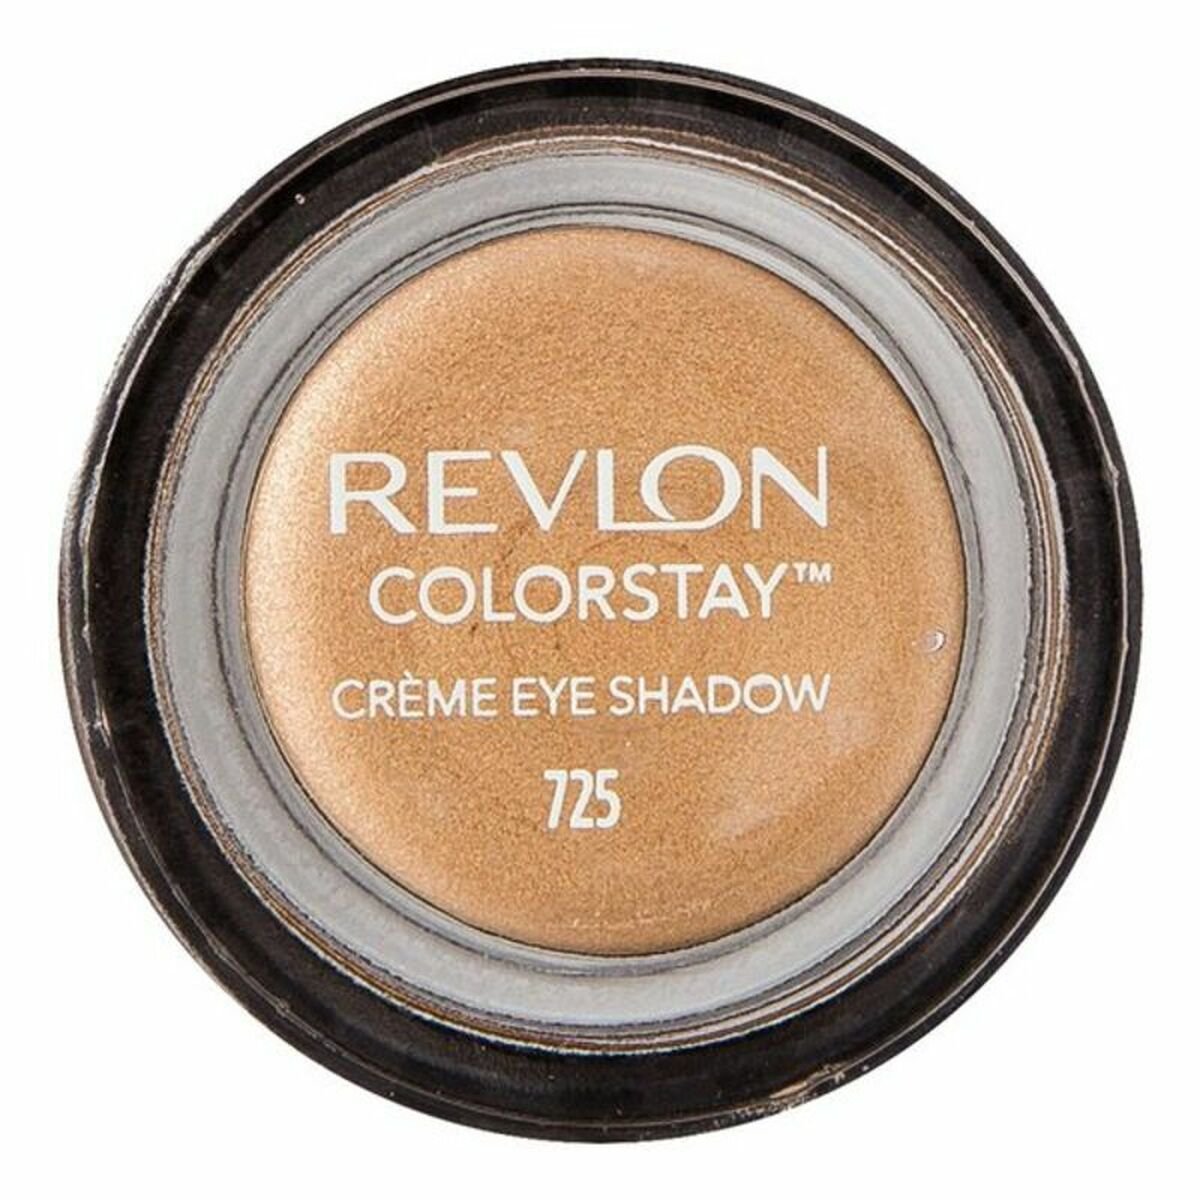 Eyeshadow Colorstay Revlon - JOSEPH BEAUTY